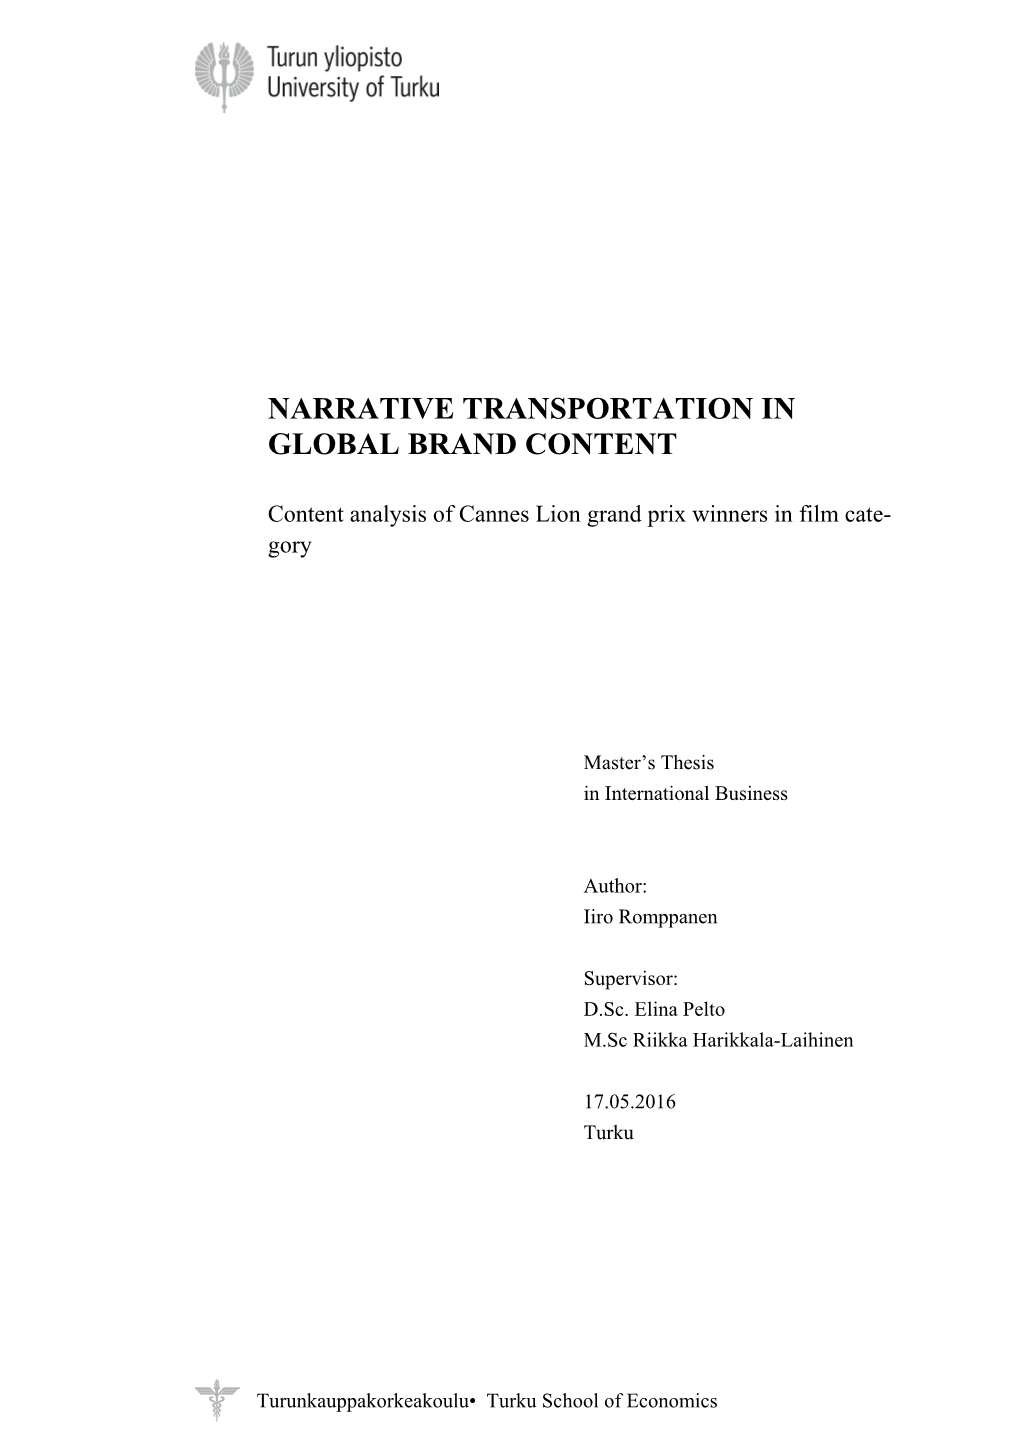 Narrative Transportation in Global Brand Content